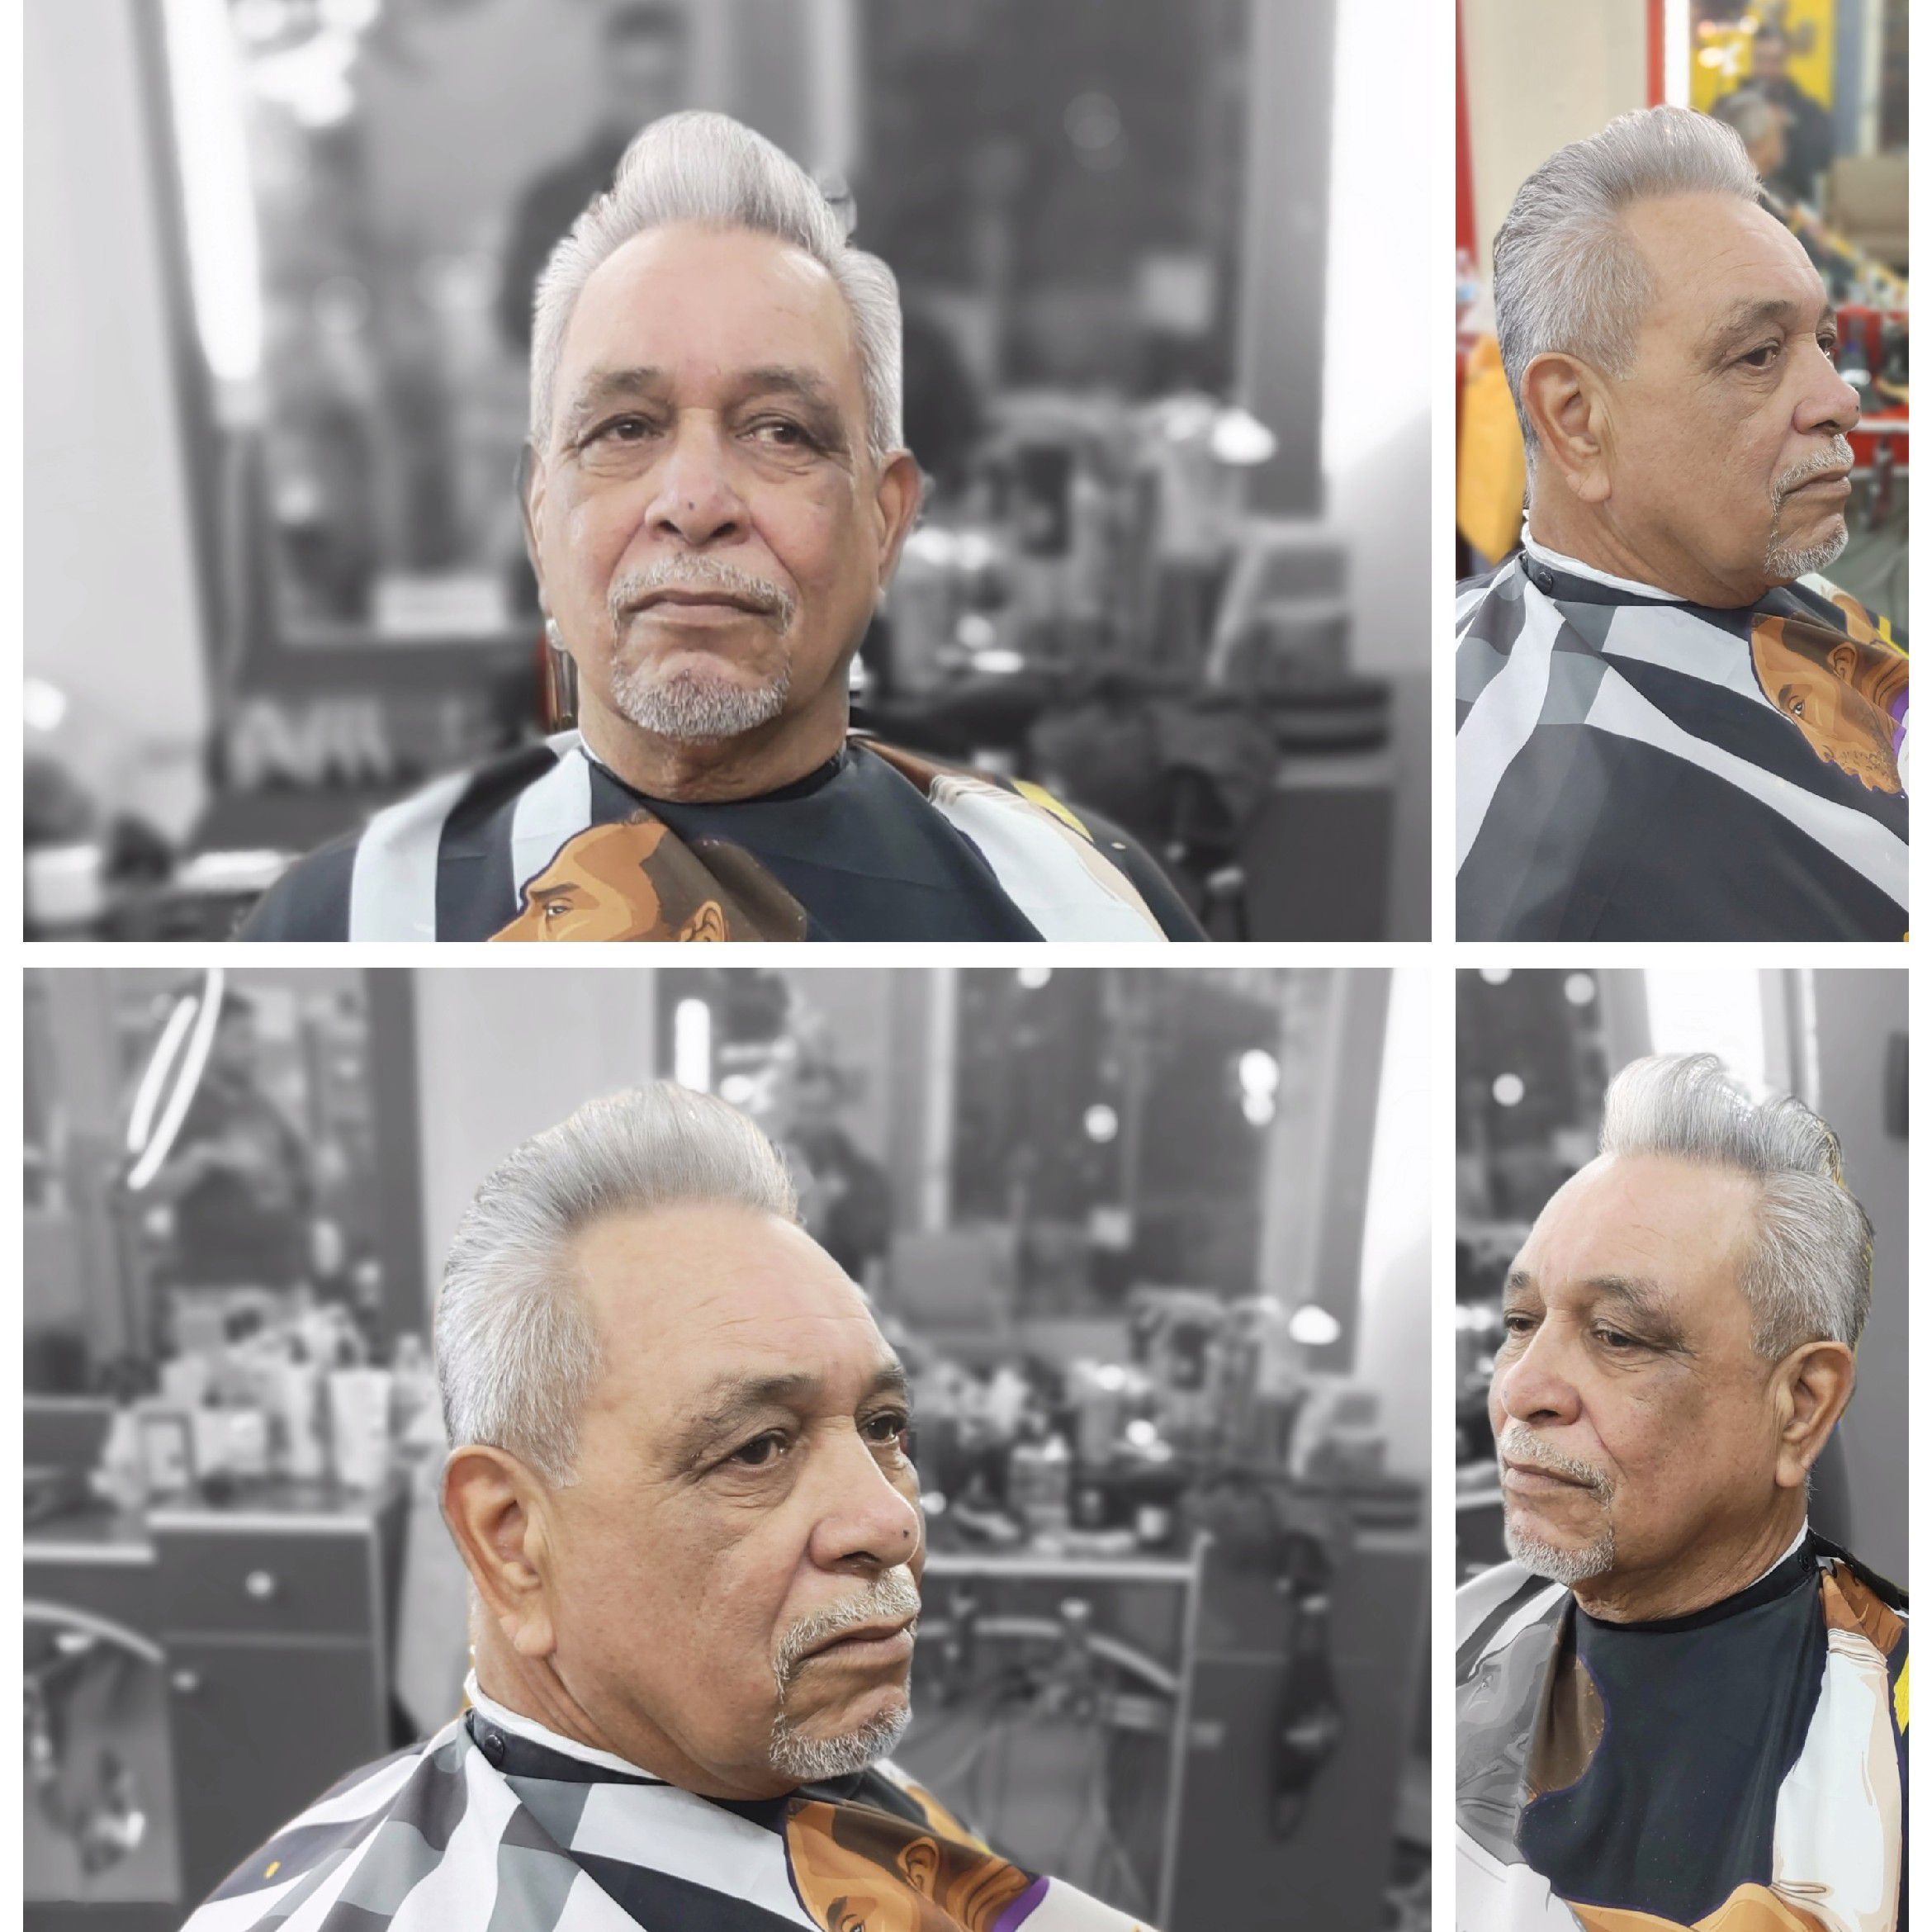 Adult haircut With Beard portfolio